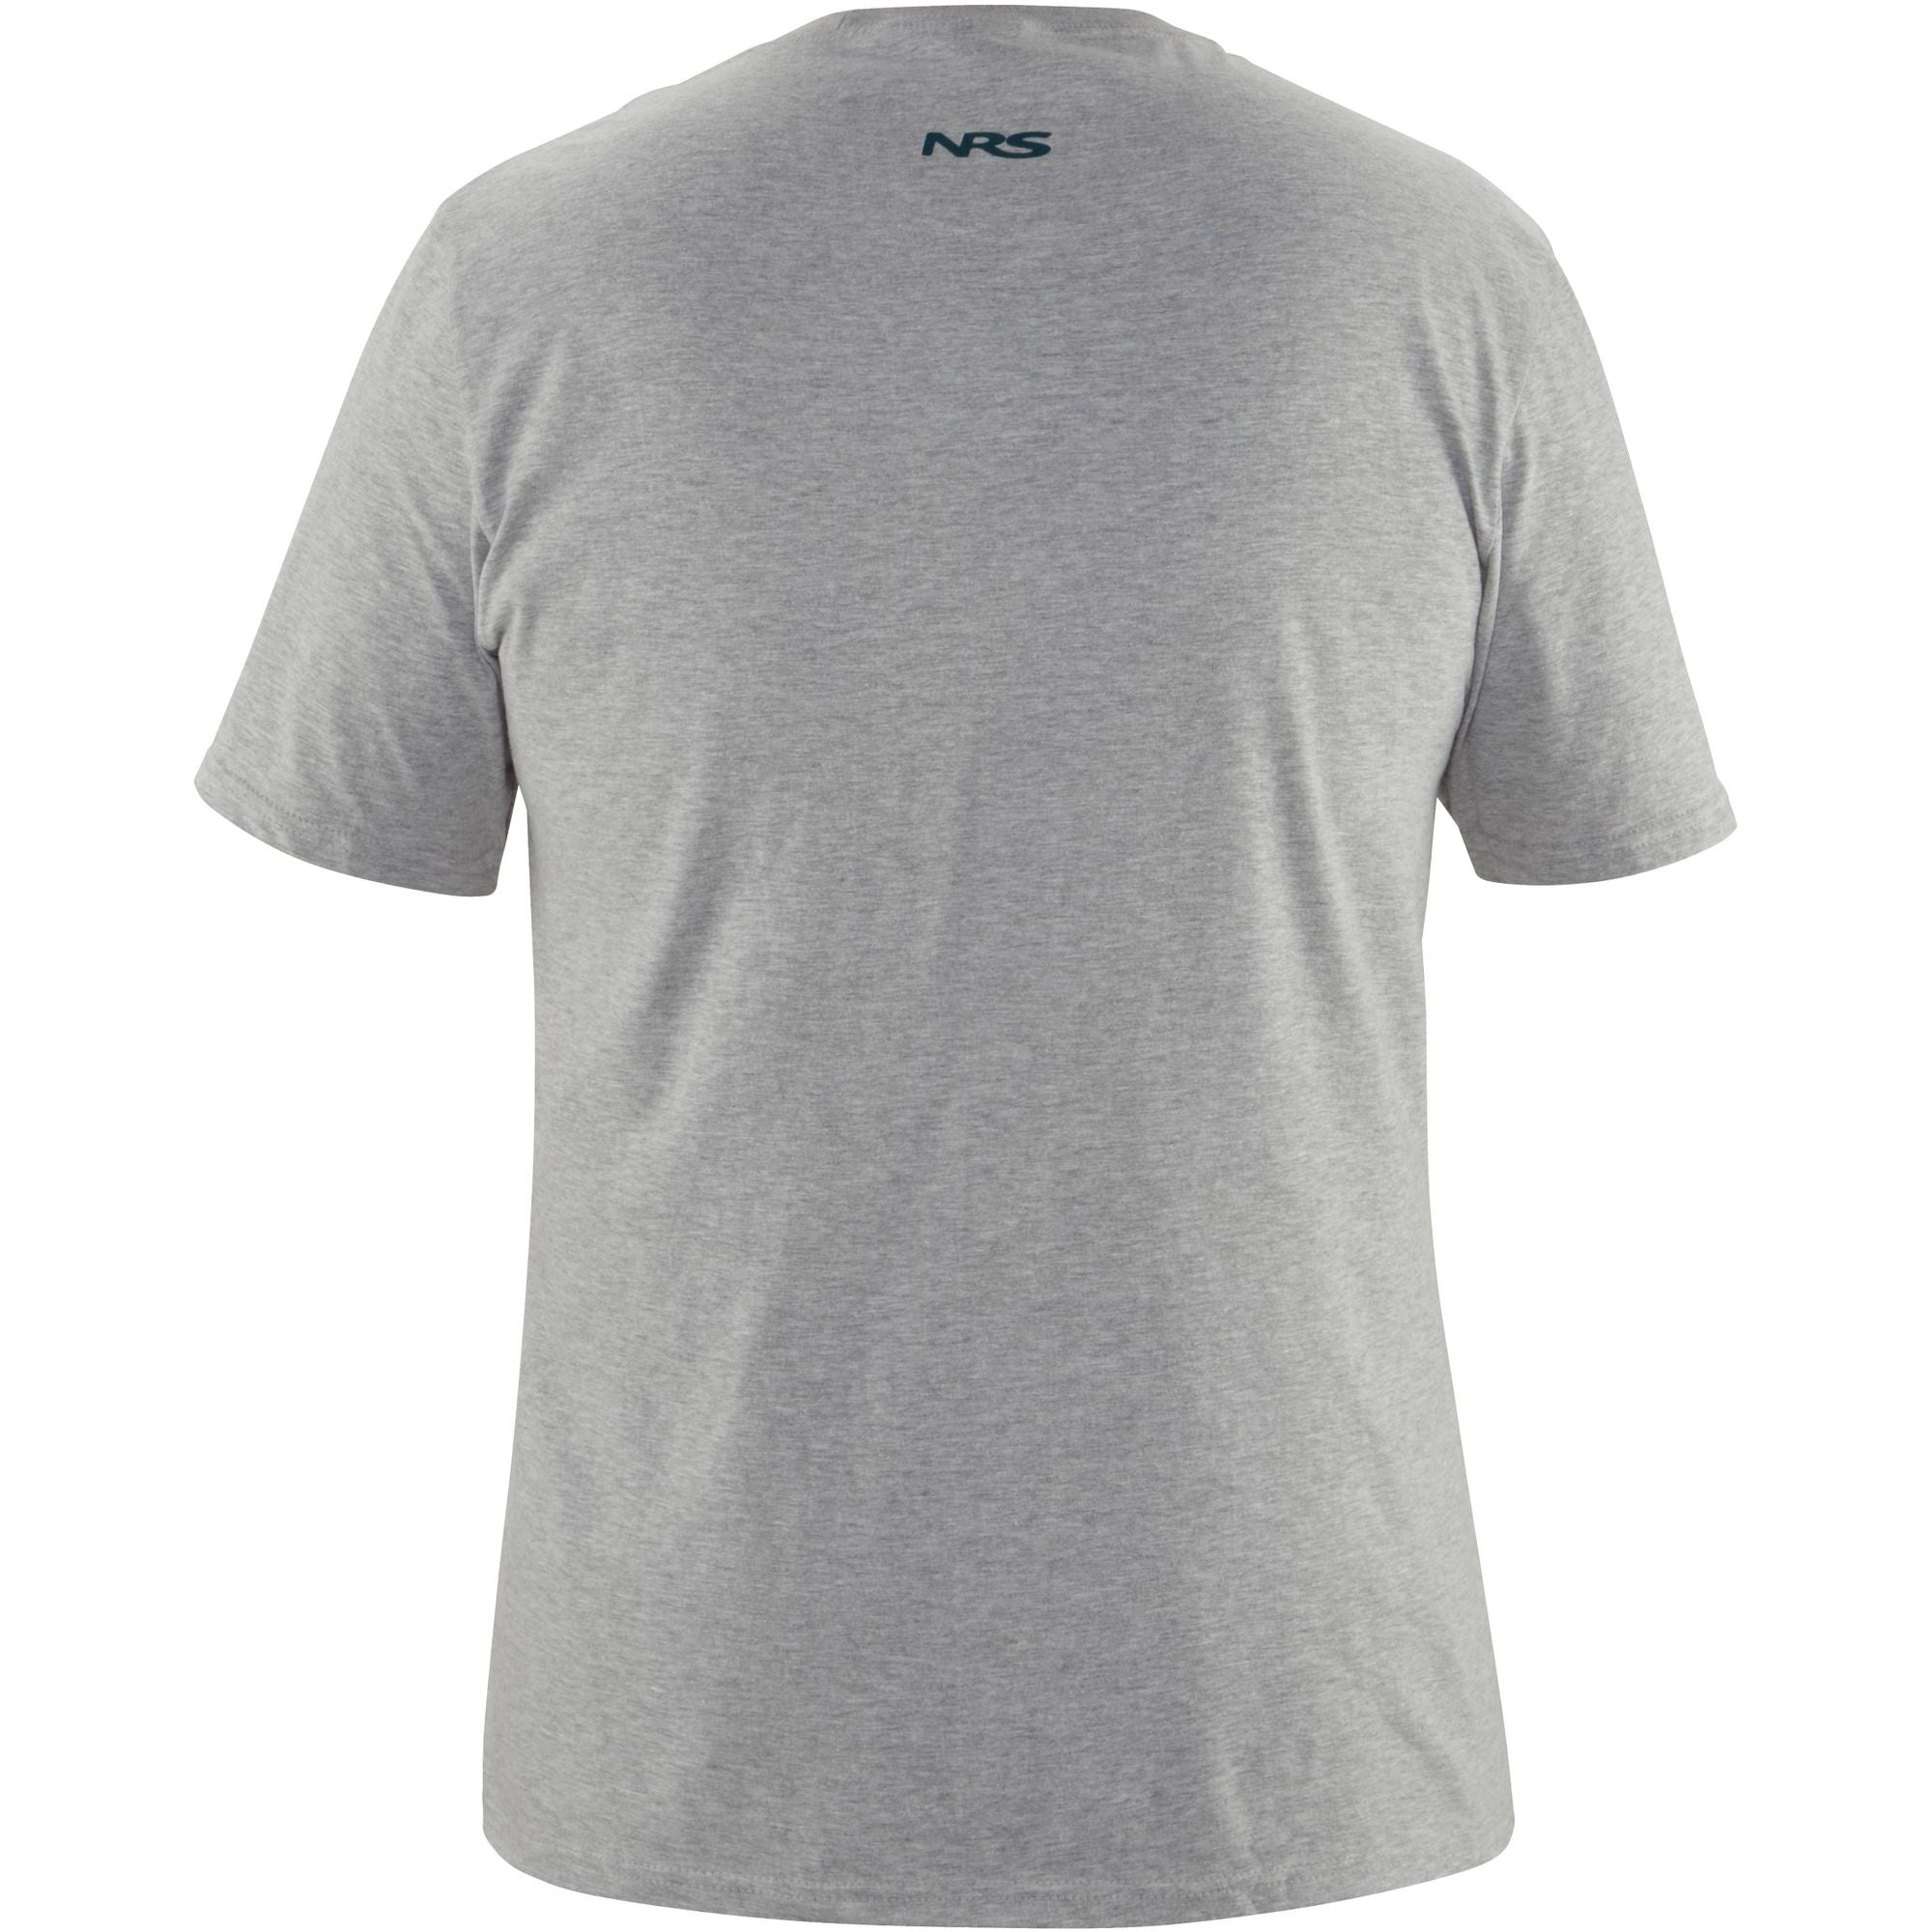 NRS - Men's Retro T-Shirt